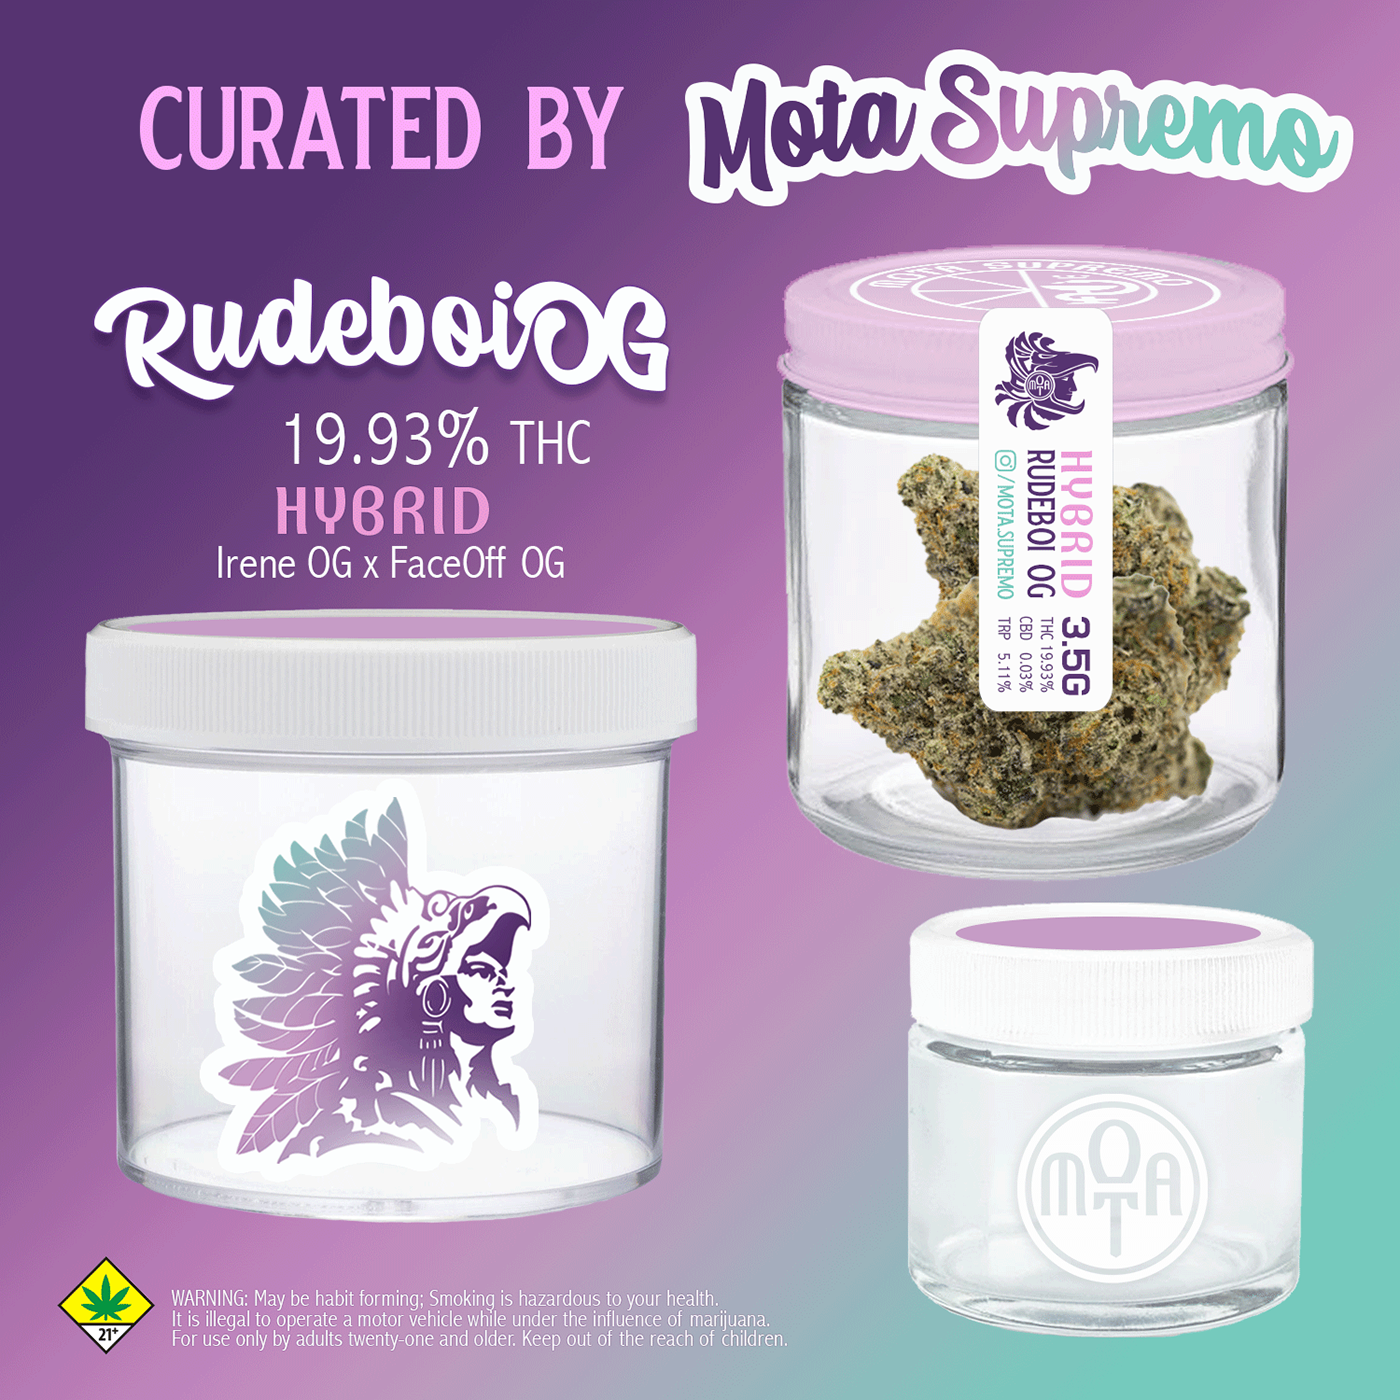 Cannabisbranding branding  logo graphic design  logo concept concept mota supremo medical Recreational high retail